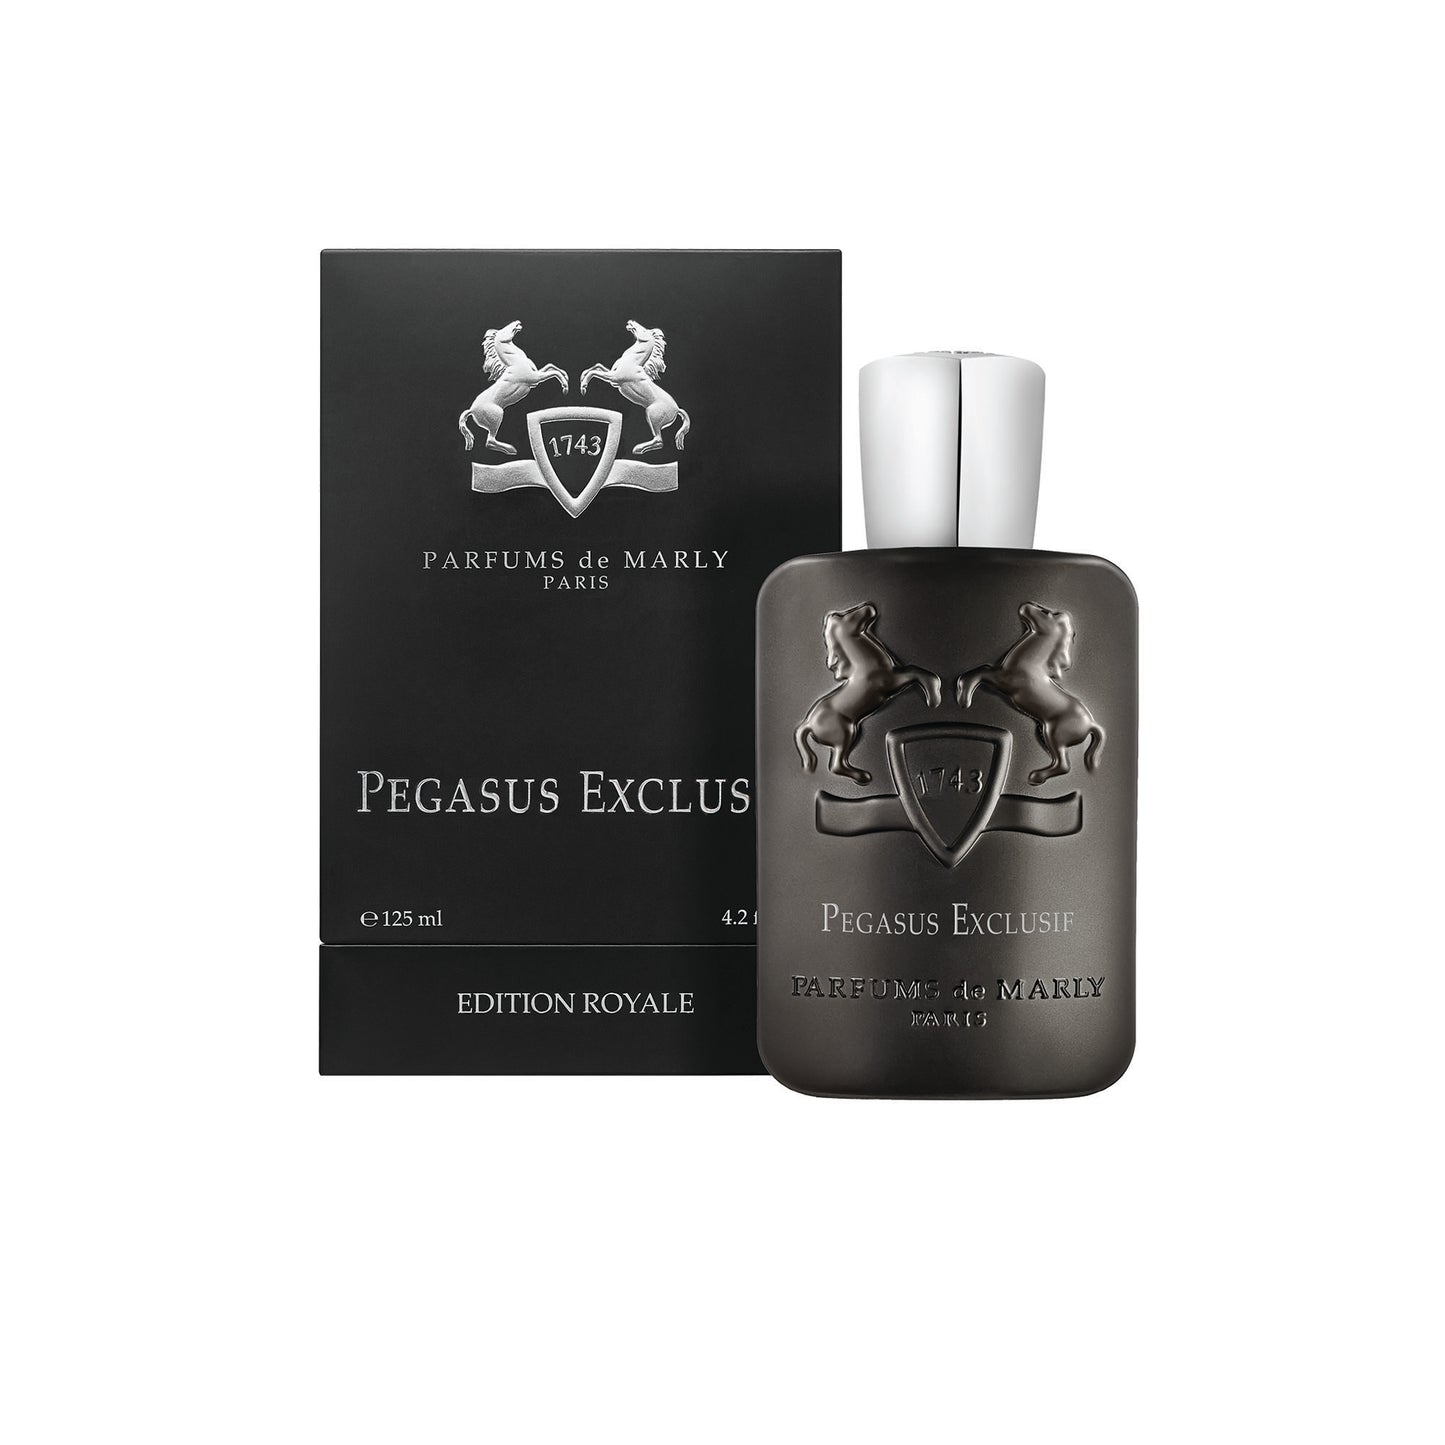 PEGASUS EXCLUSIF 1.2ml Sample Vial - Eau de Parfum